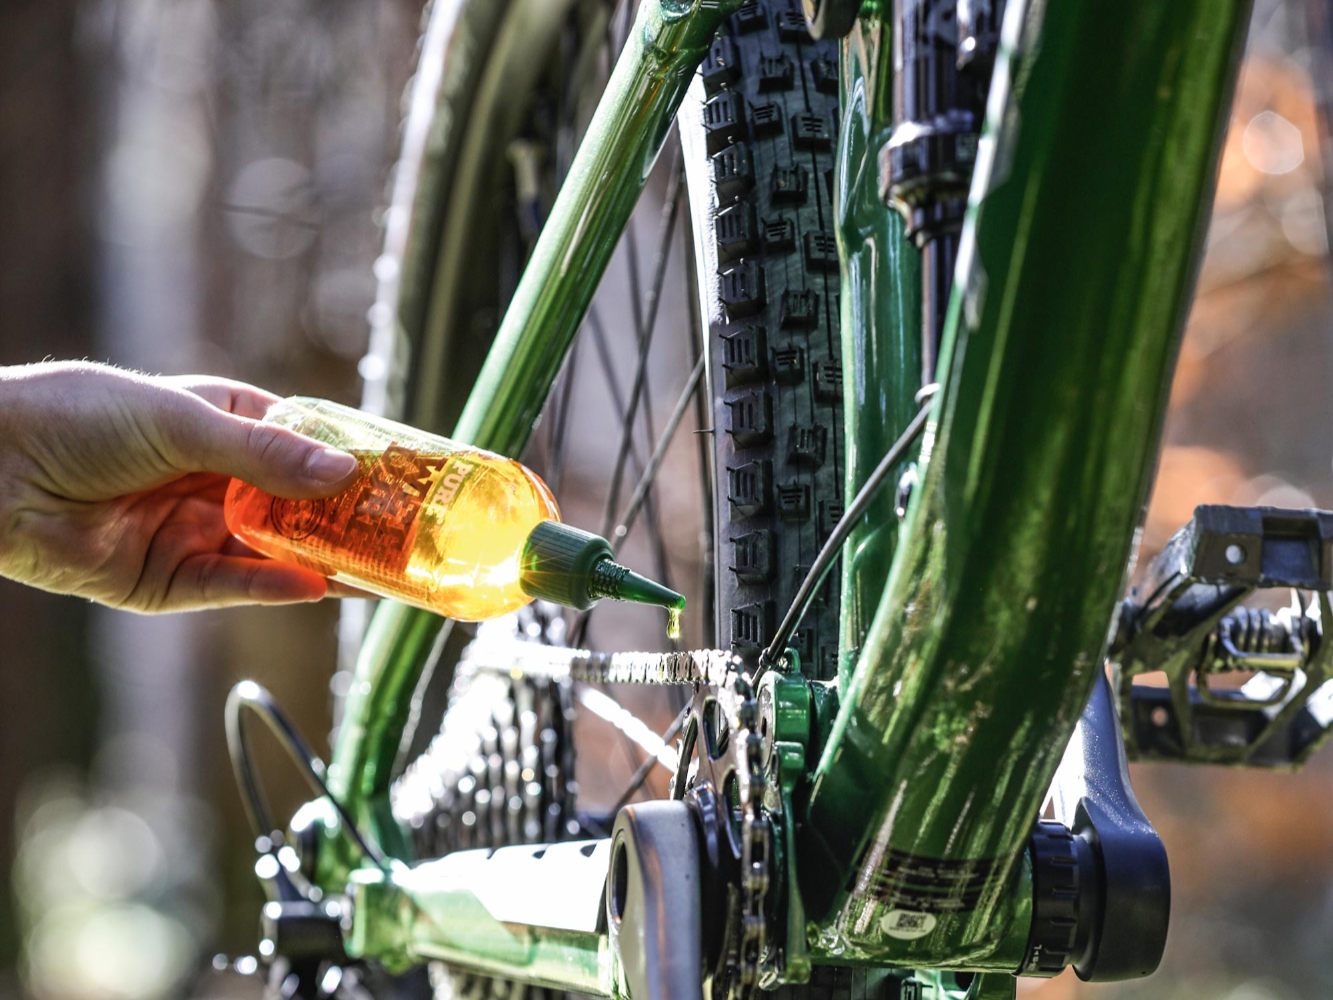 NIGRIN BIKE-CARE E-Bike-Kettenöl, 100 ml Flasche, Fahrradkettenöl